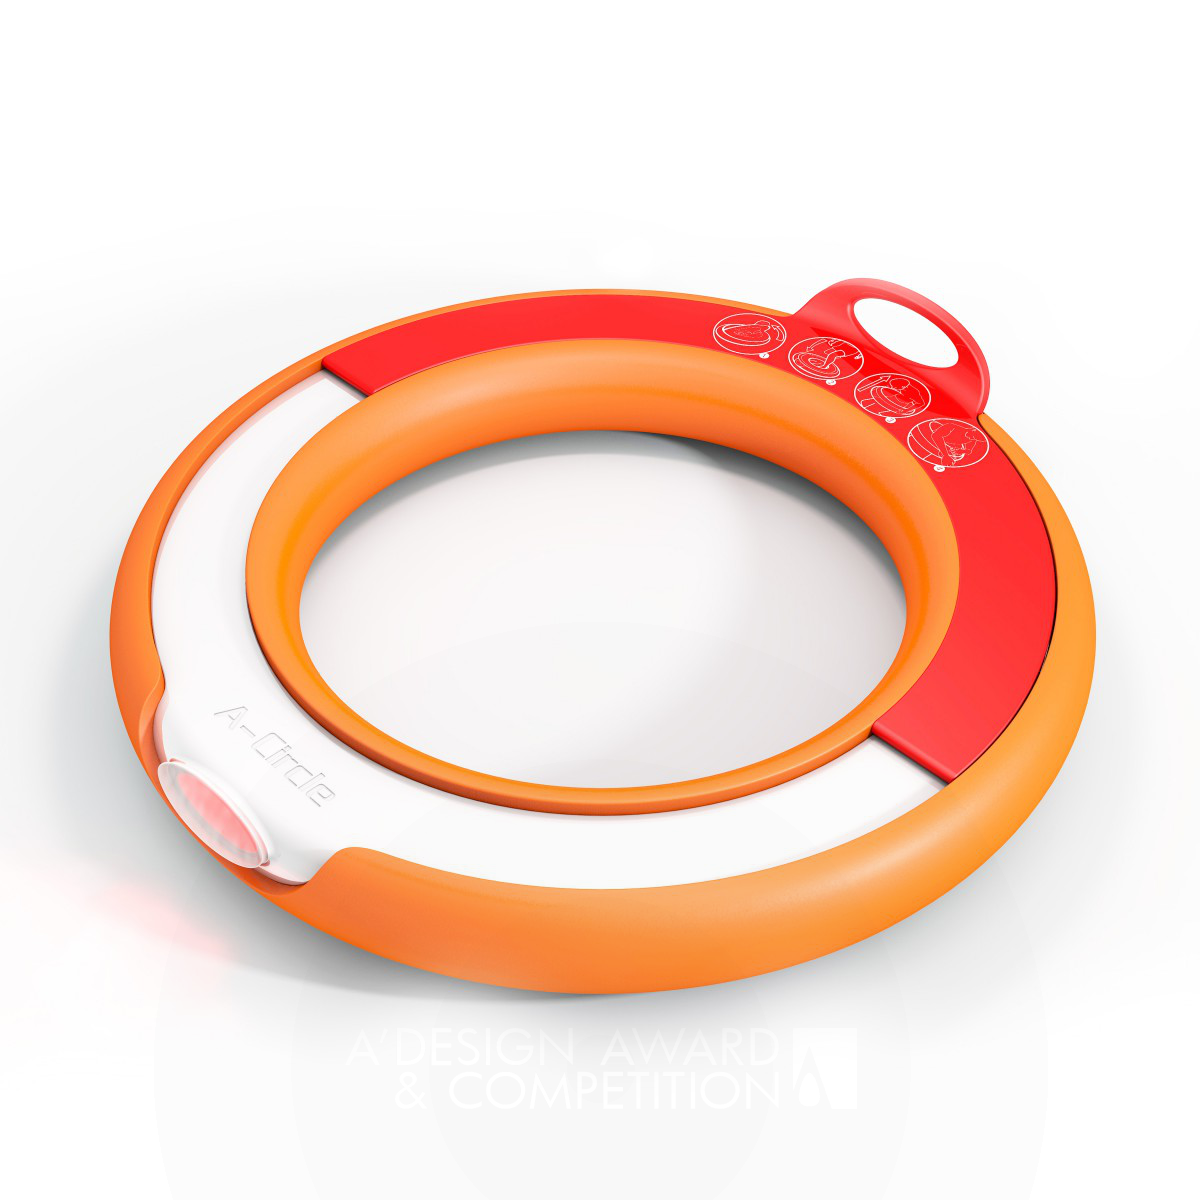 A-circle life buoy